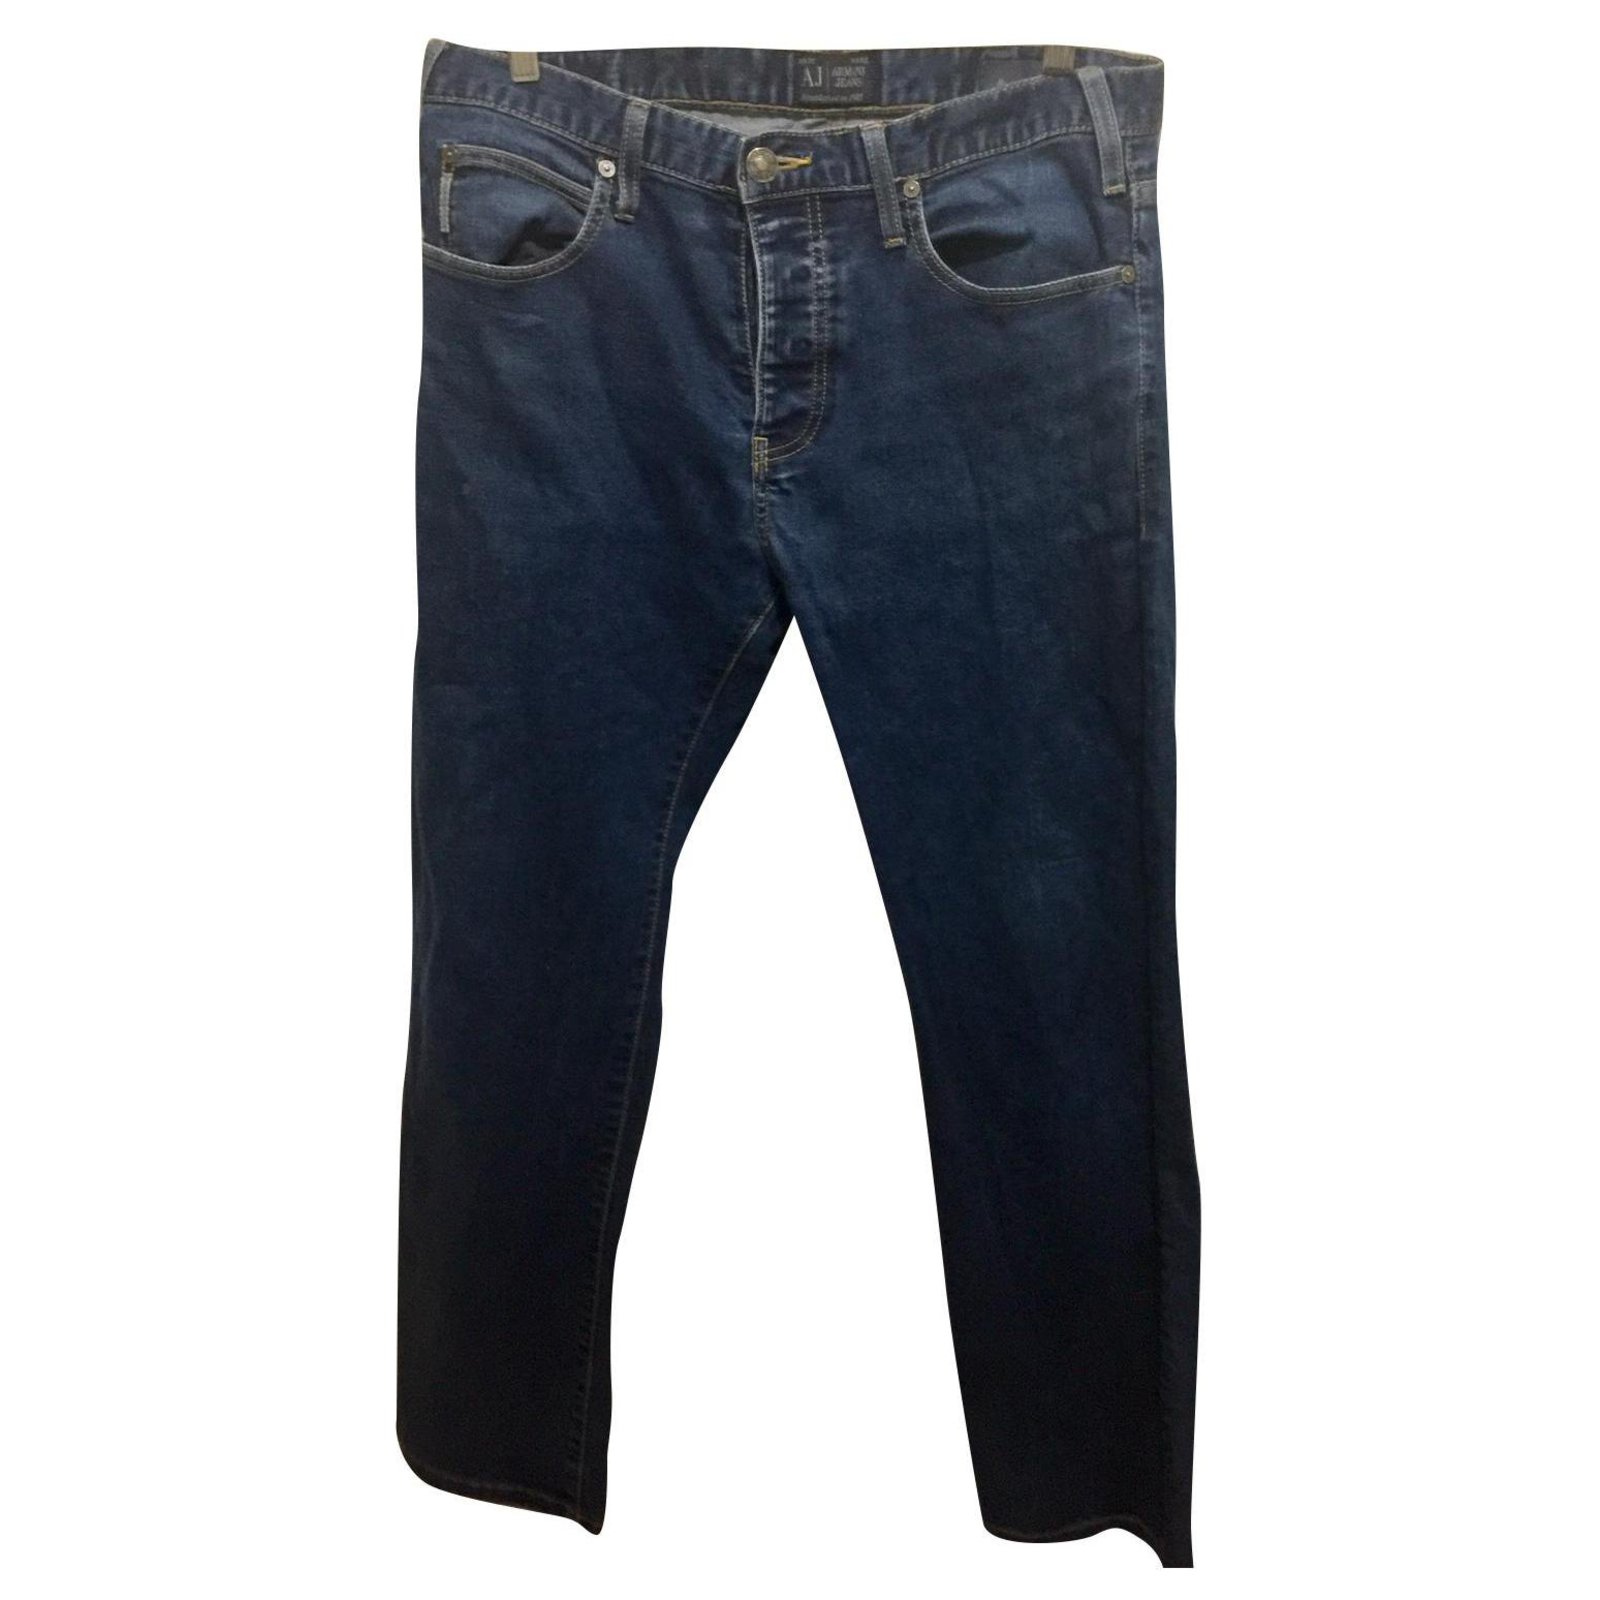 Armani Jeans Armani Jeans size 32/32 